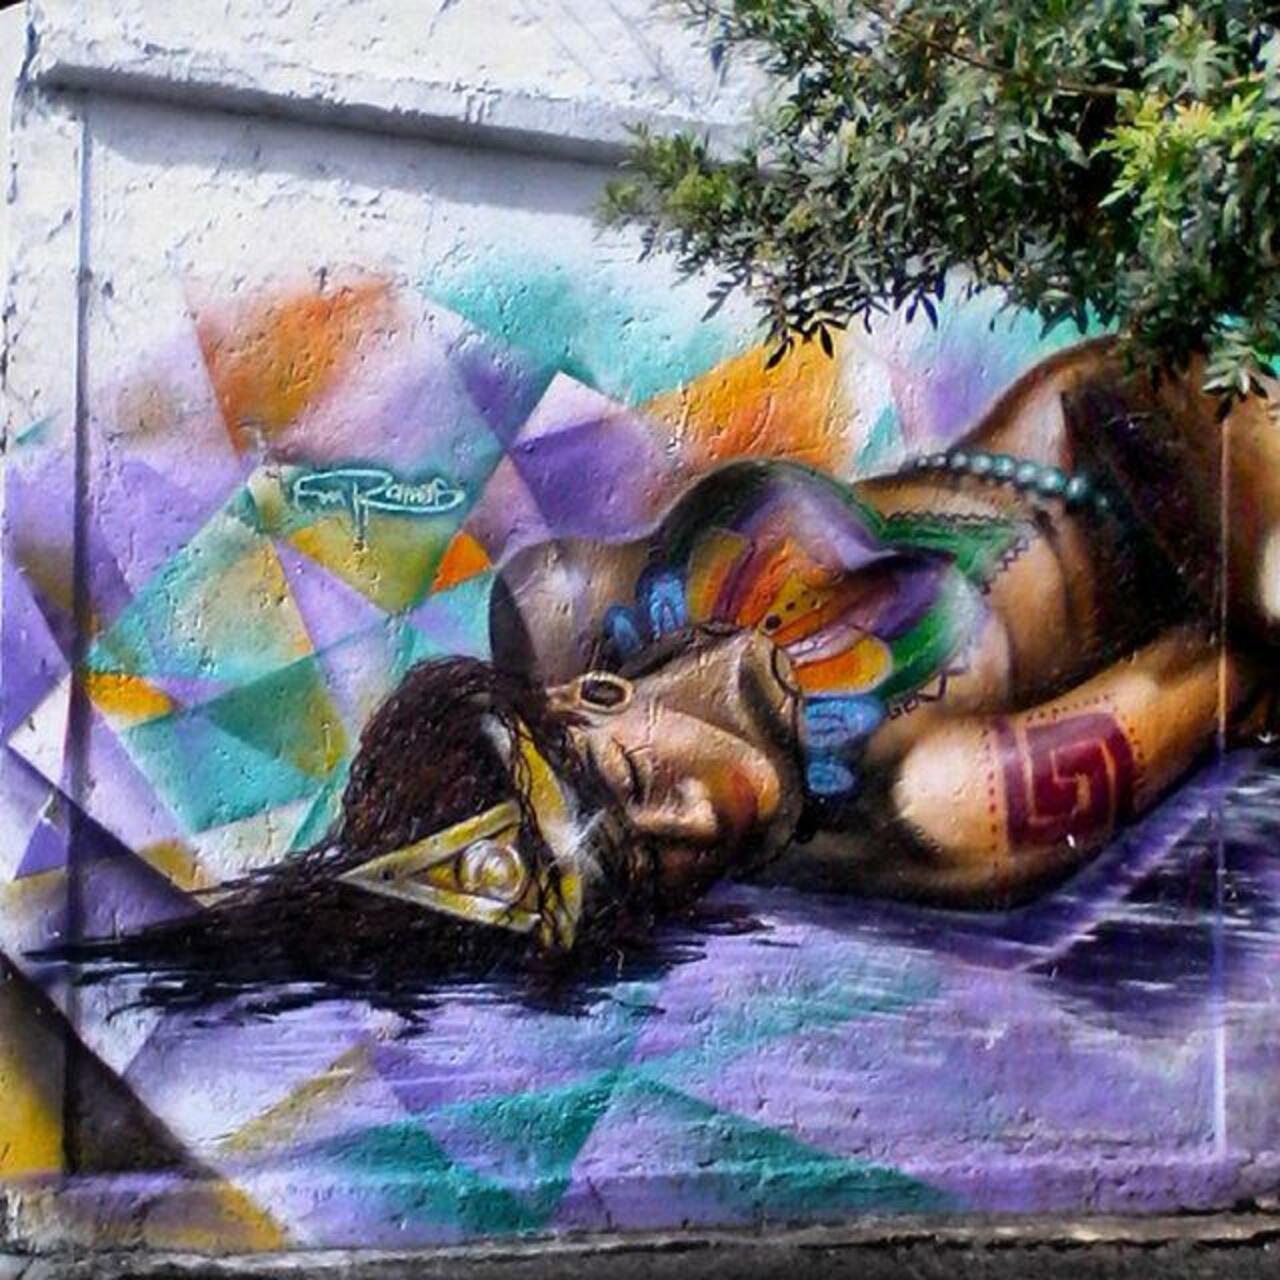 #Mexico #MexicoCity #StreetArt #Graffiti #StreetArtMexico #Urban #Art #Mural #Architecture #Wall #Woman #Aztec #Pri… http://t.co/egoonVAp16